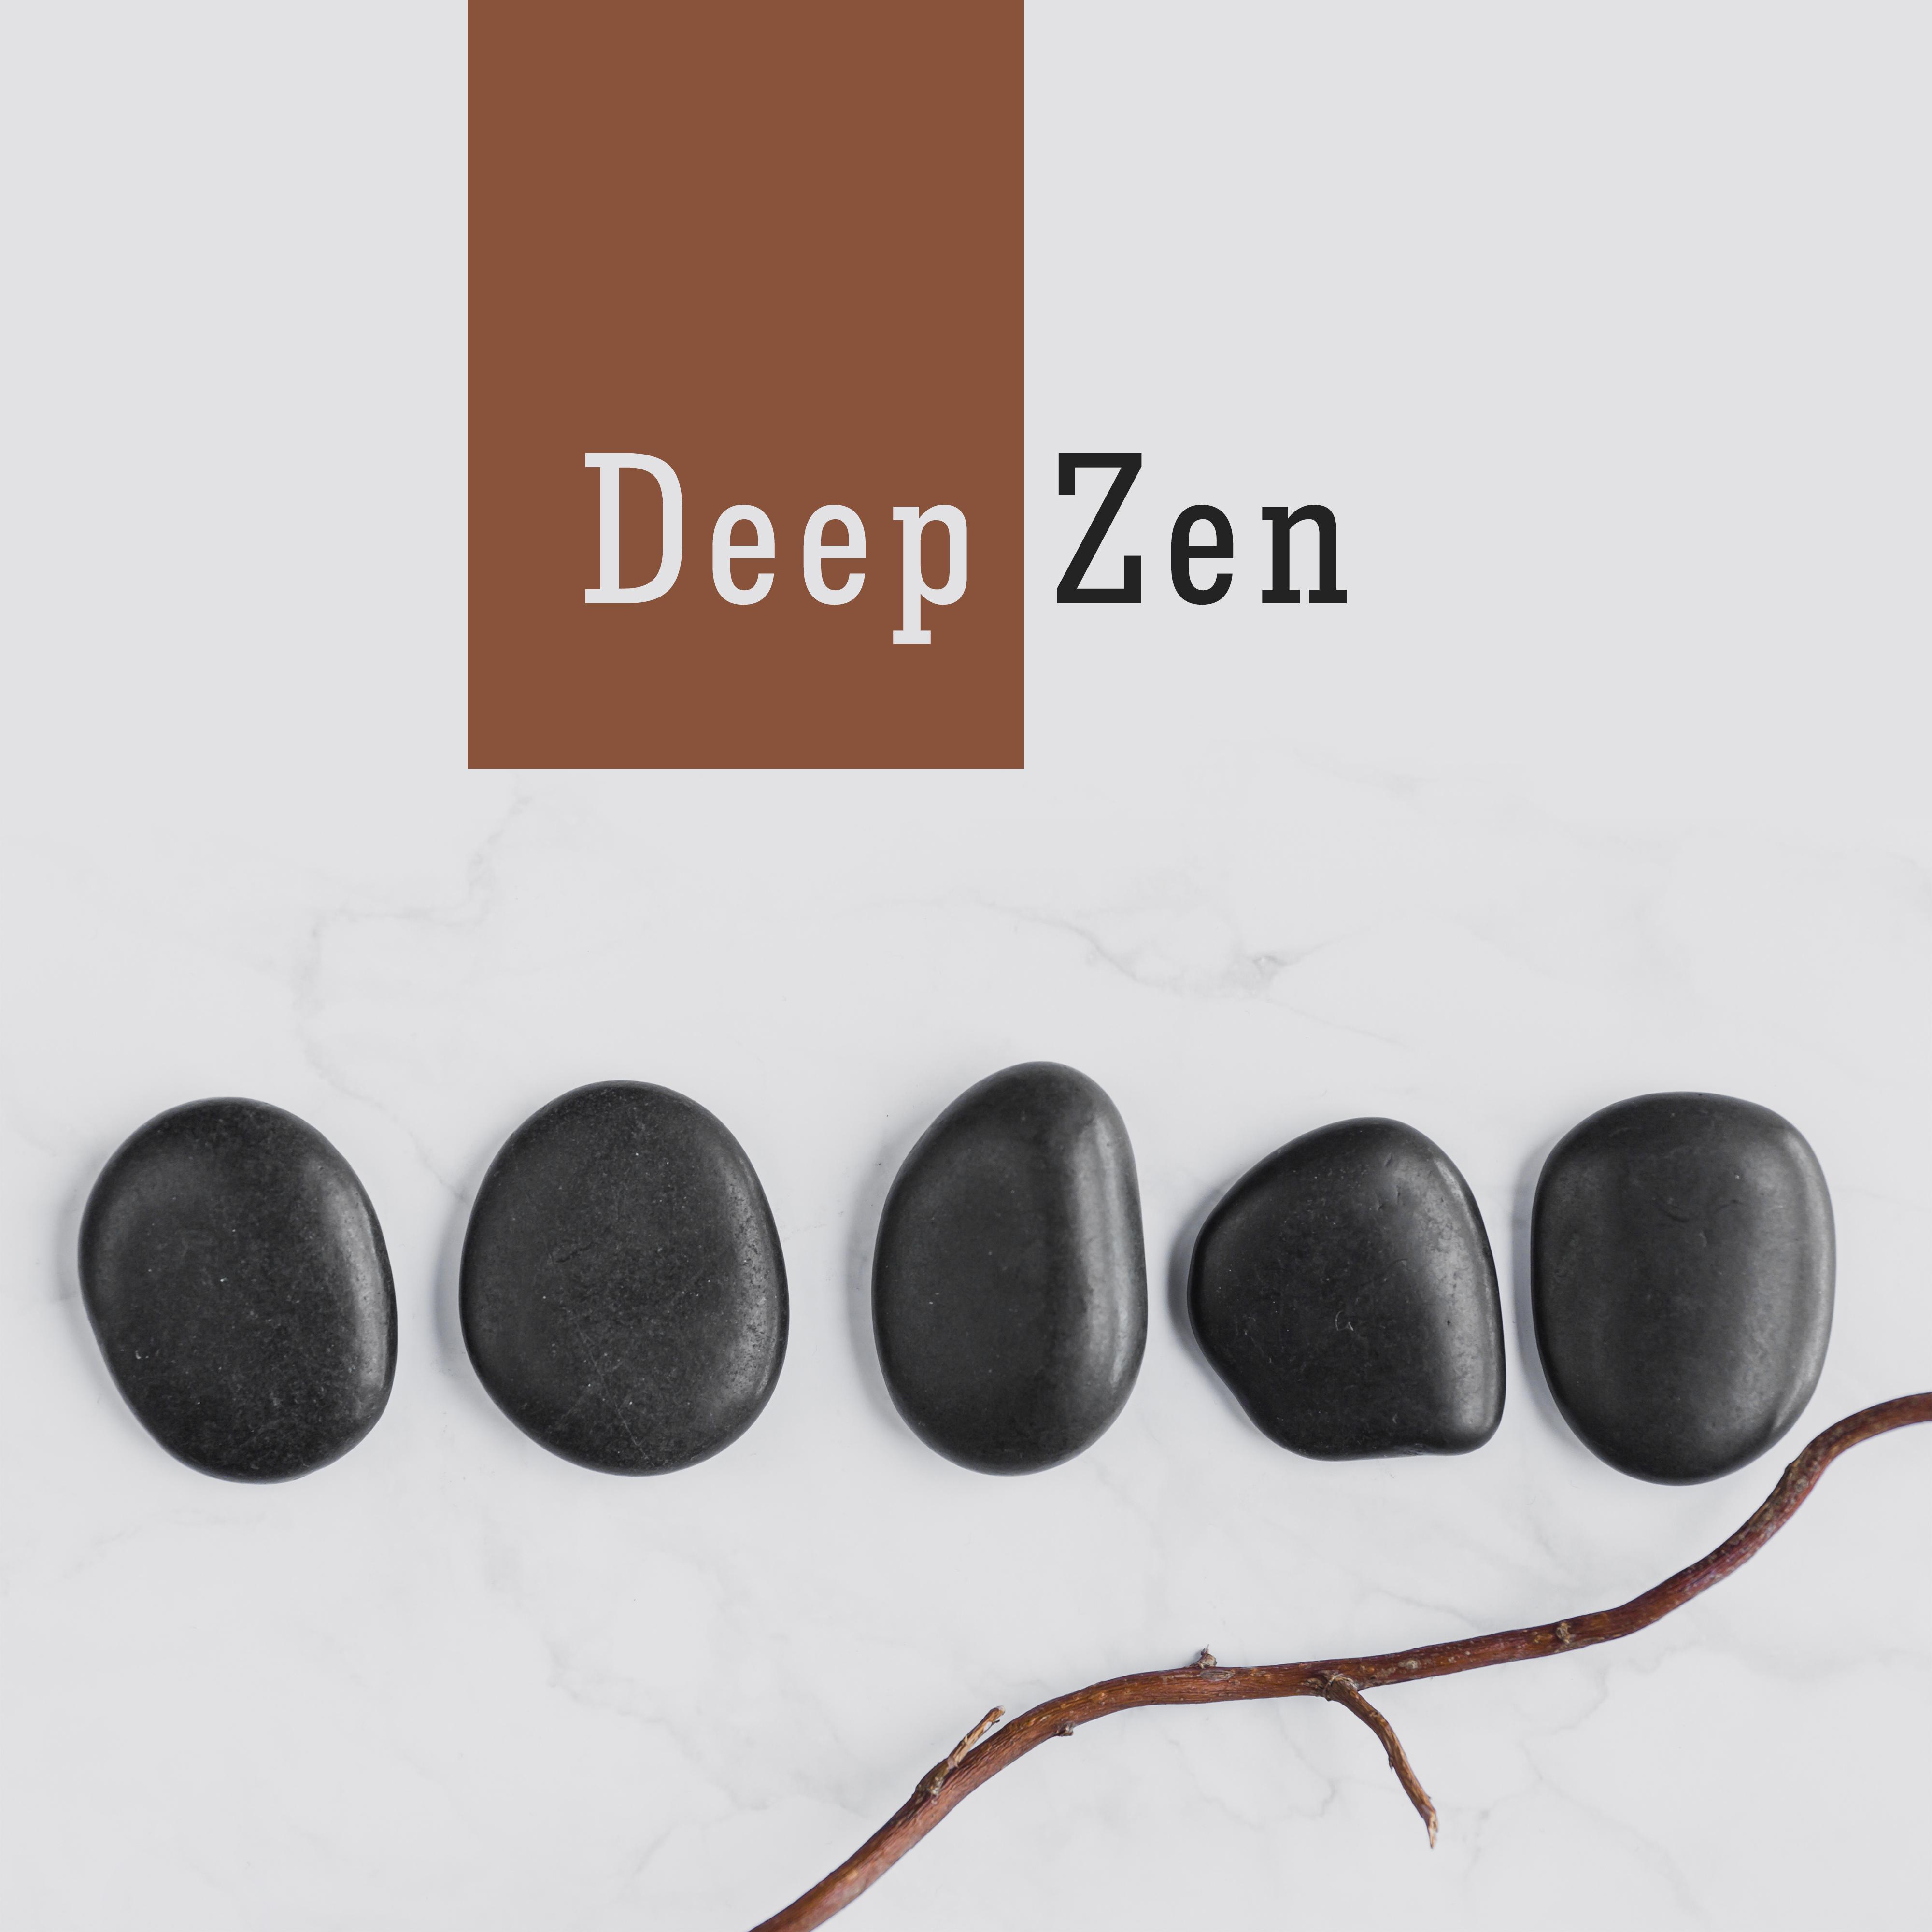 Deep Zen – Healing Meditation Music, Yoga Music for Relaxation, Reduce Stress, New Age Music for Deep Meditation, Inner Silence, Nature Sounds